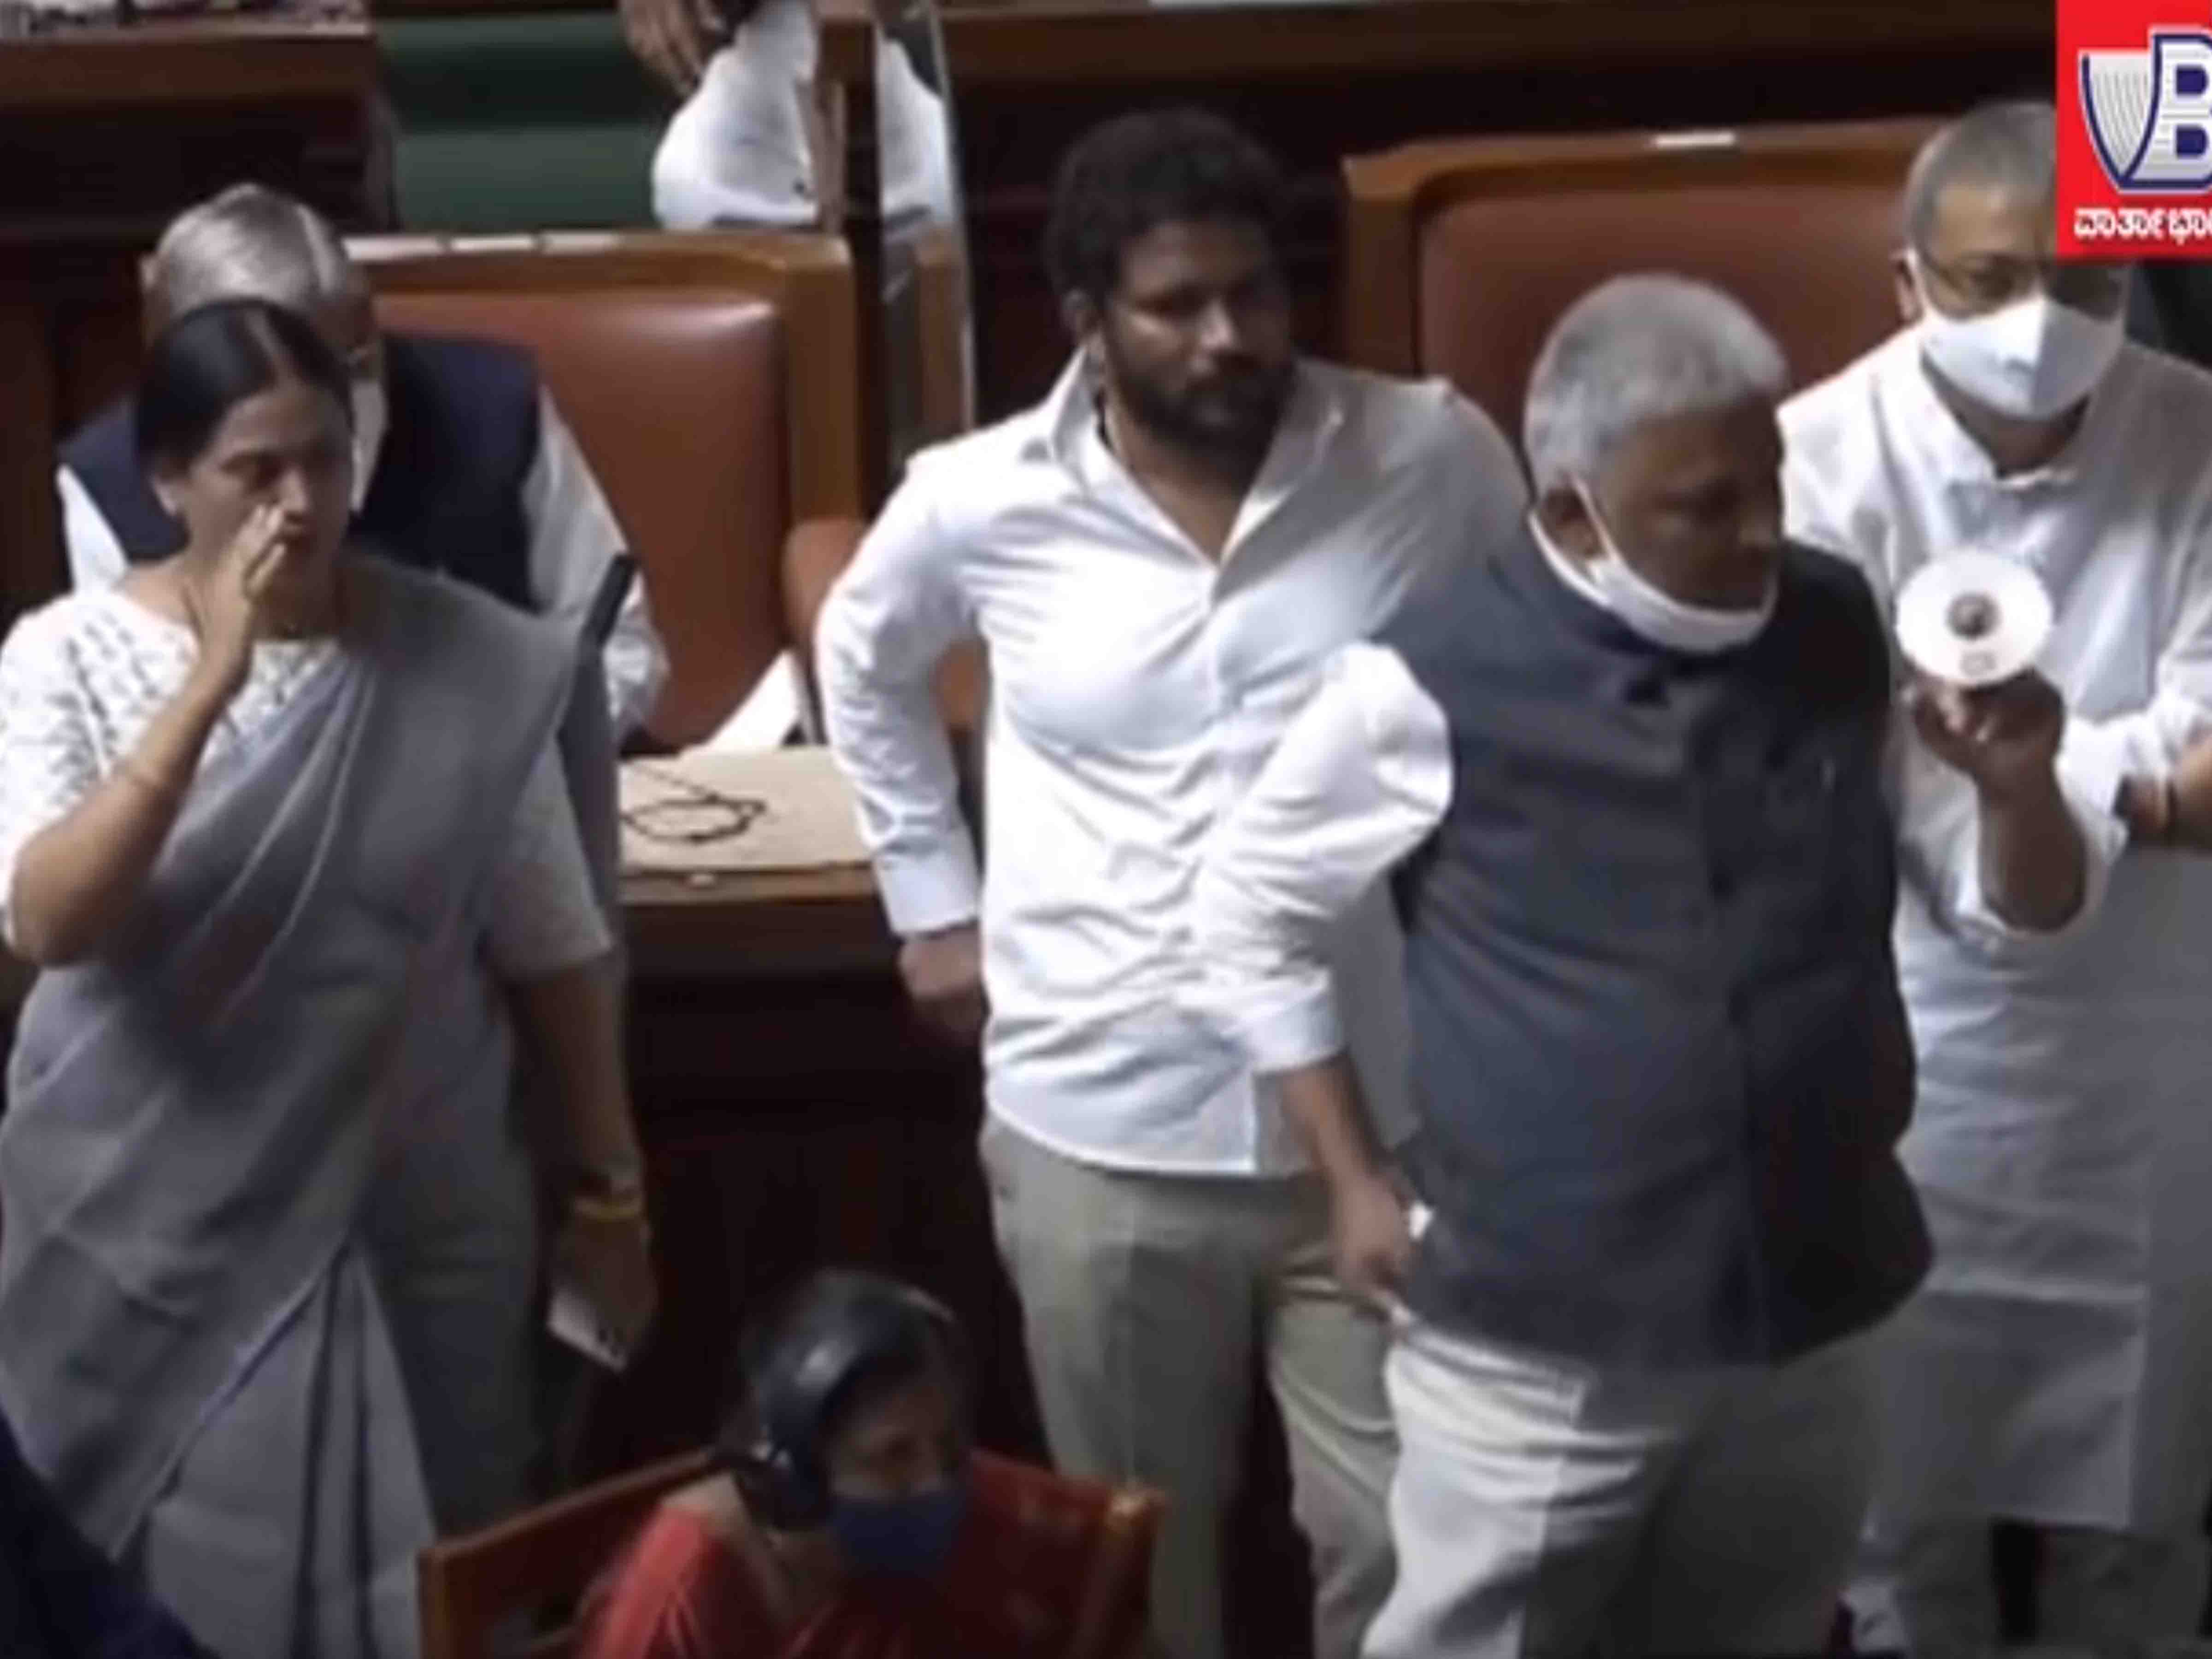 'Sex scandal' continues to rock Karnataka assembly